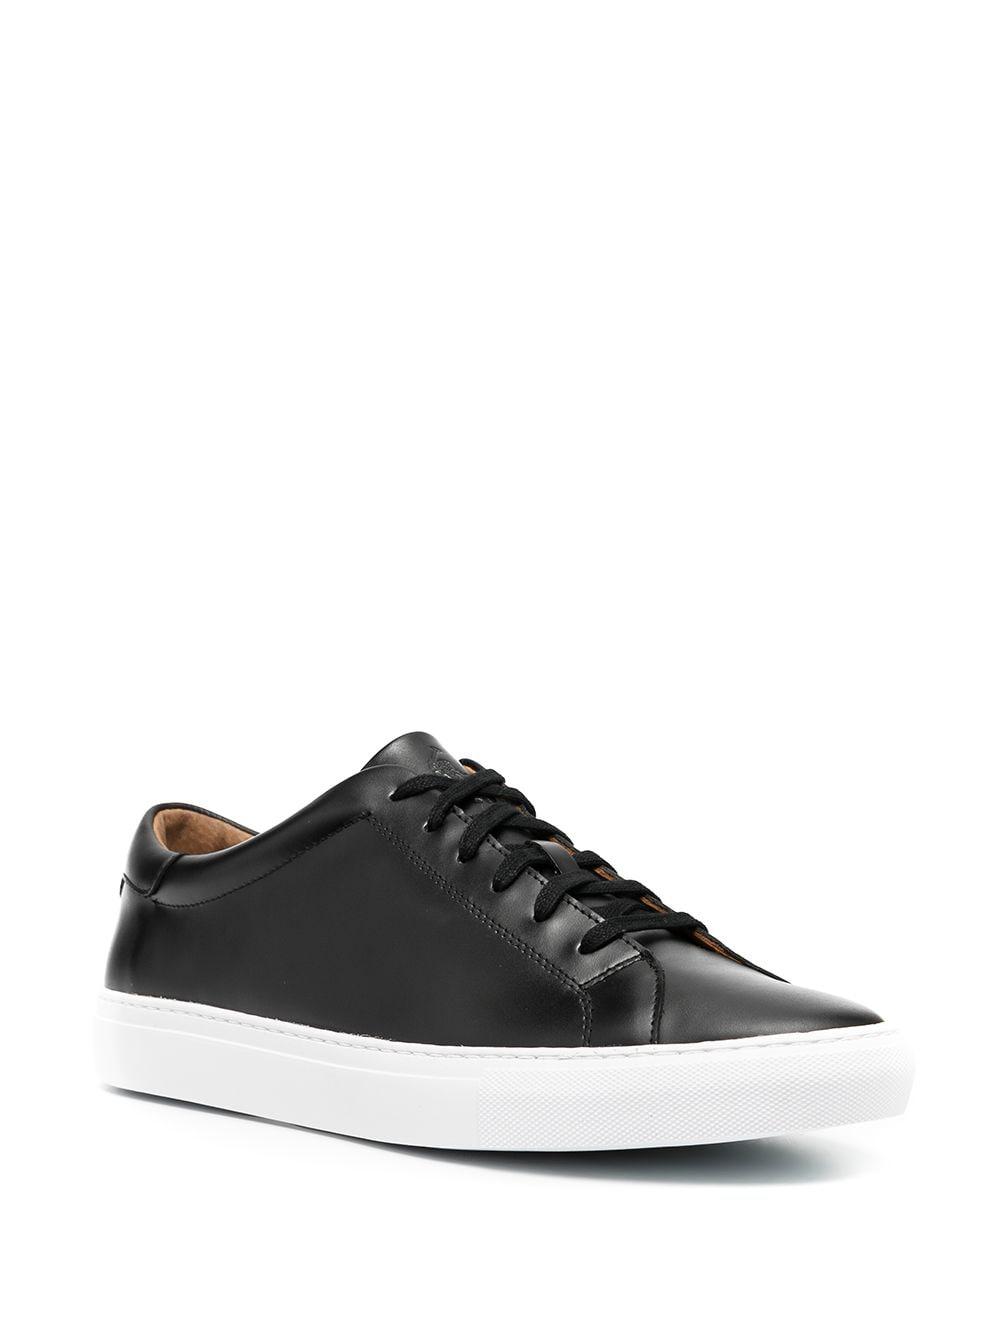 Polo Ralph Lauren Leather Jermain Ii Athletic Sneakers in Black for Men ...